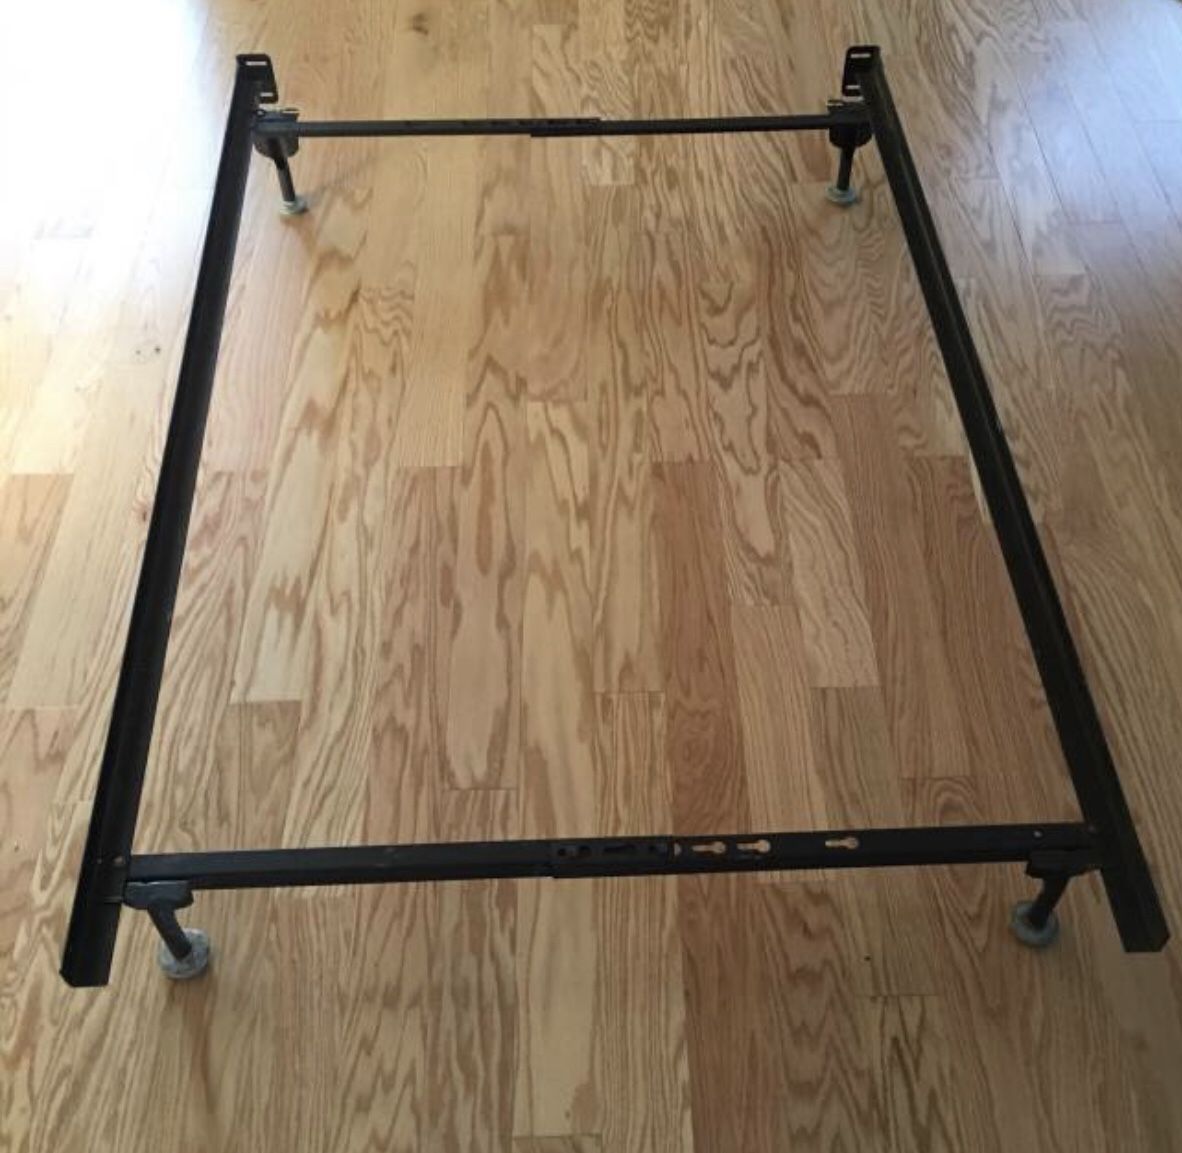 Bed frame / rail metal - $45